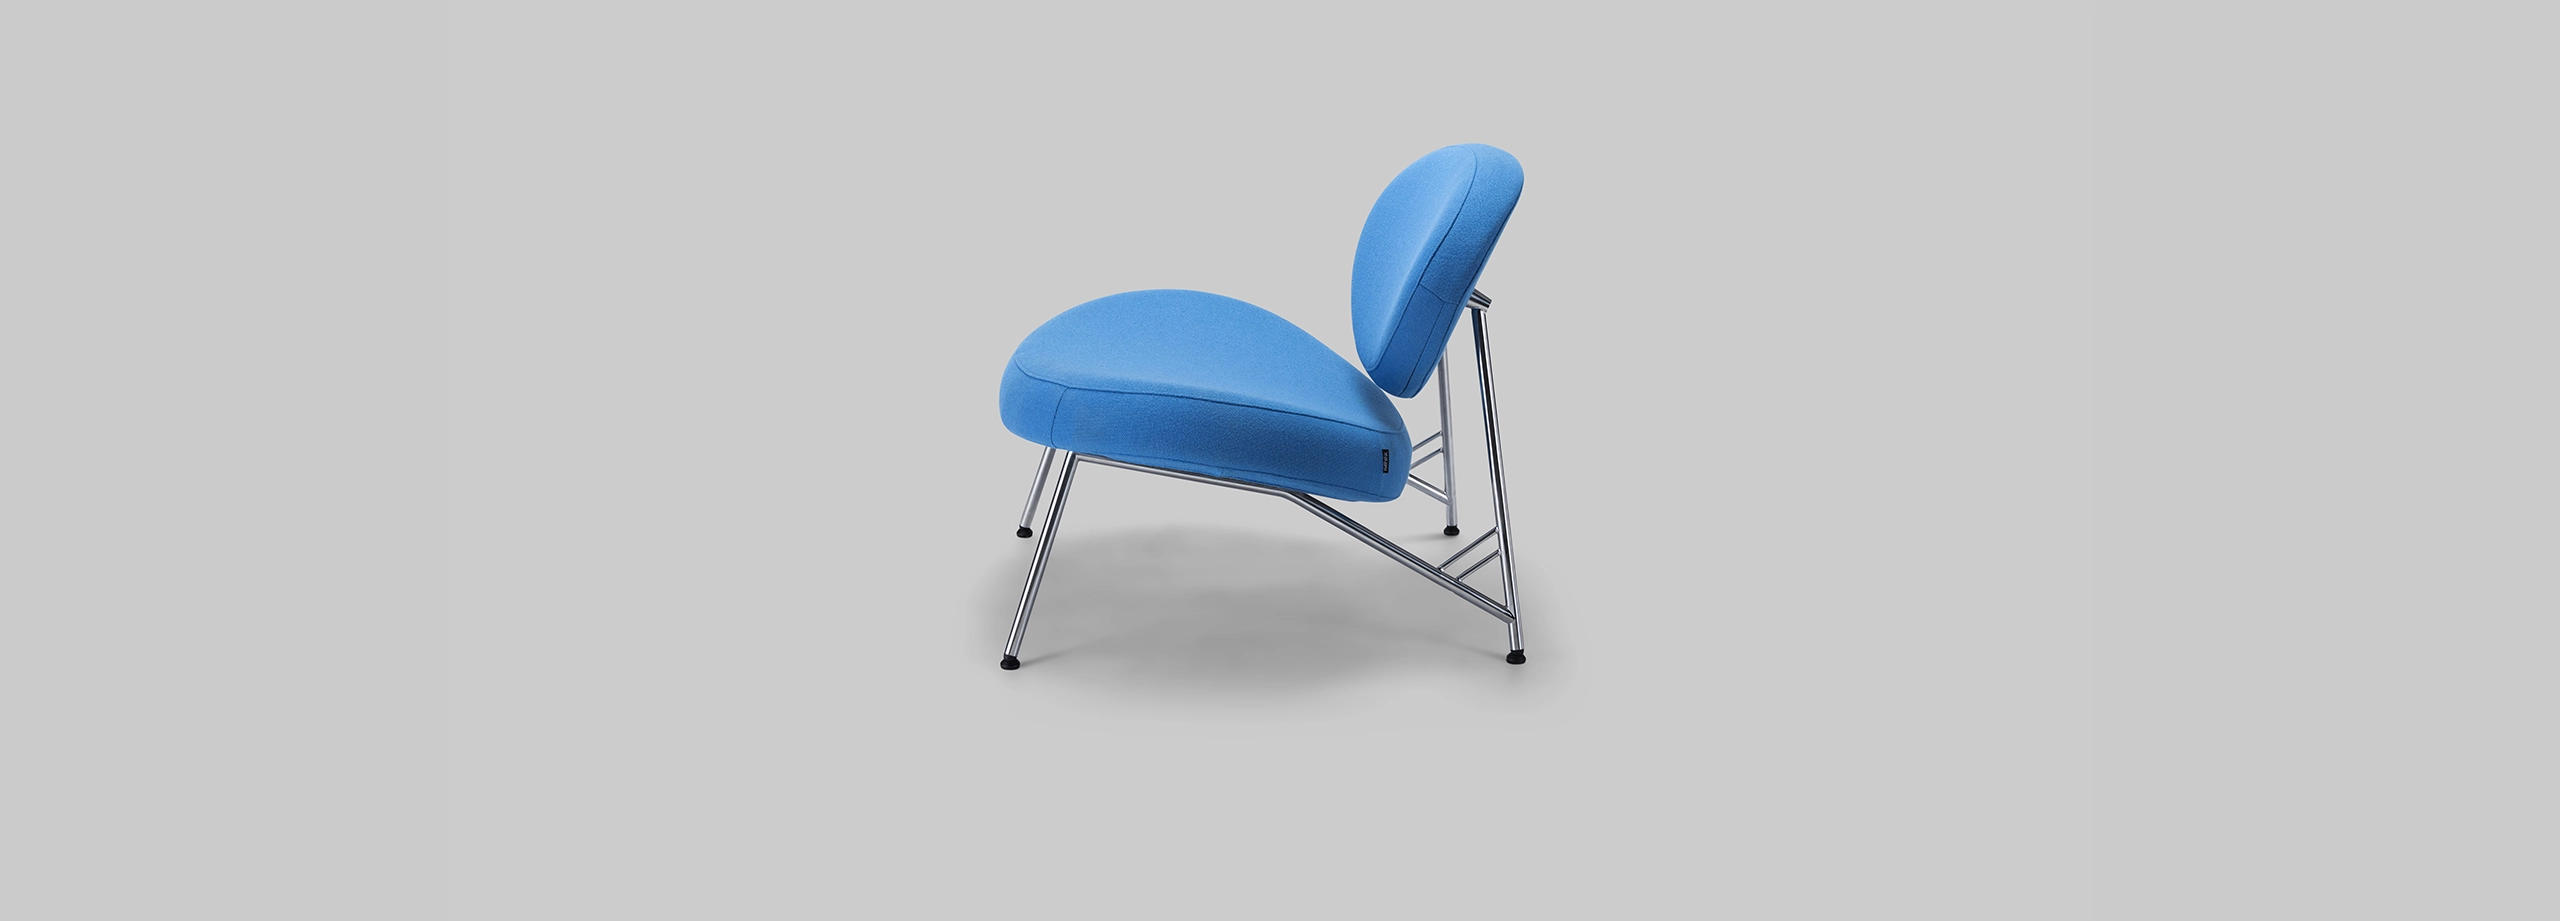 Harvink Tipi fauteuil hallingdal blauw